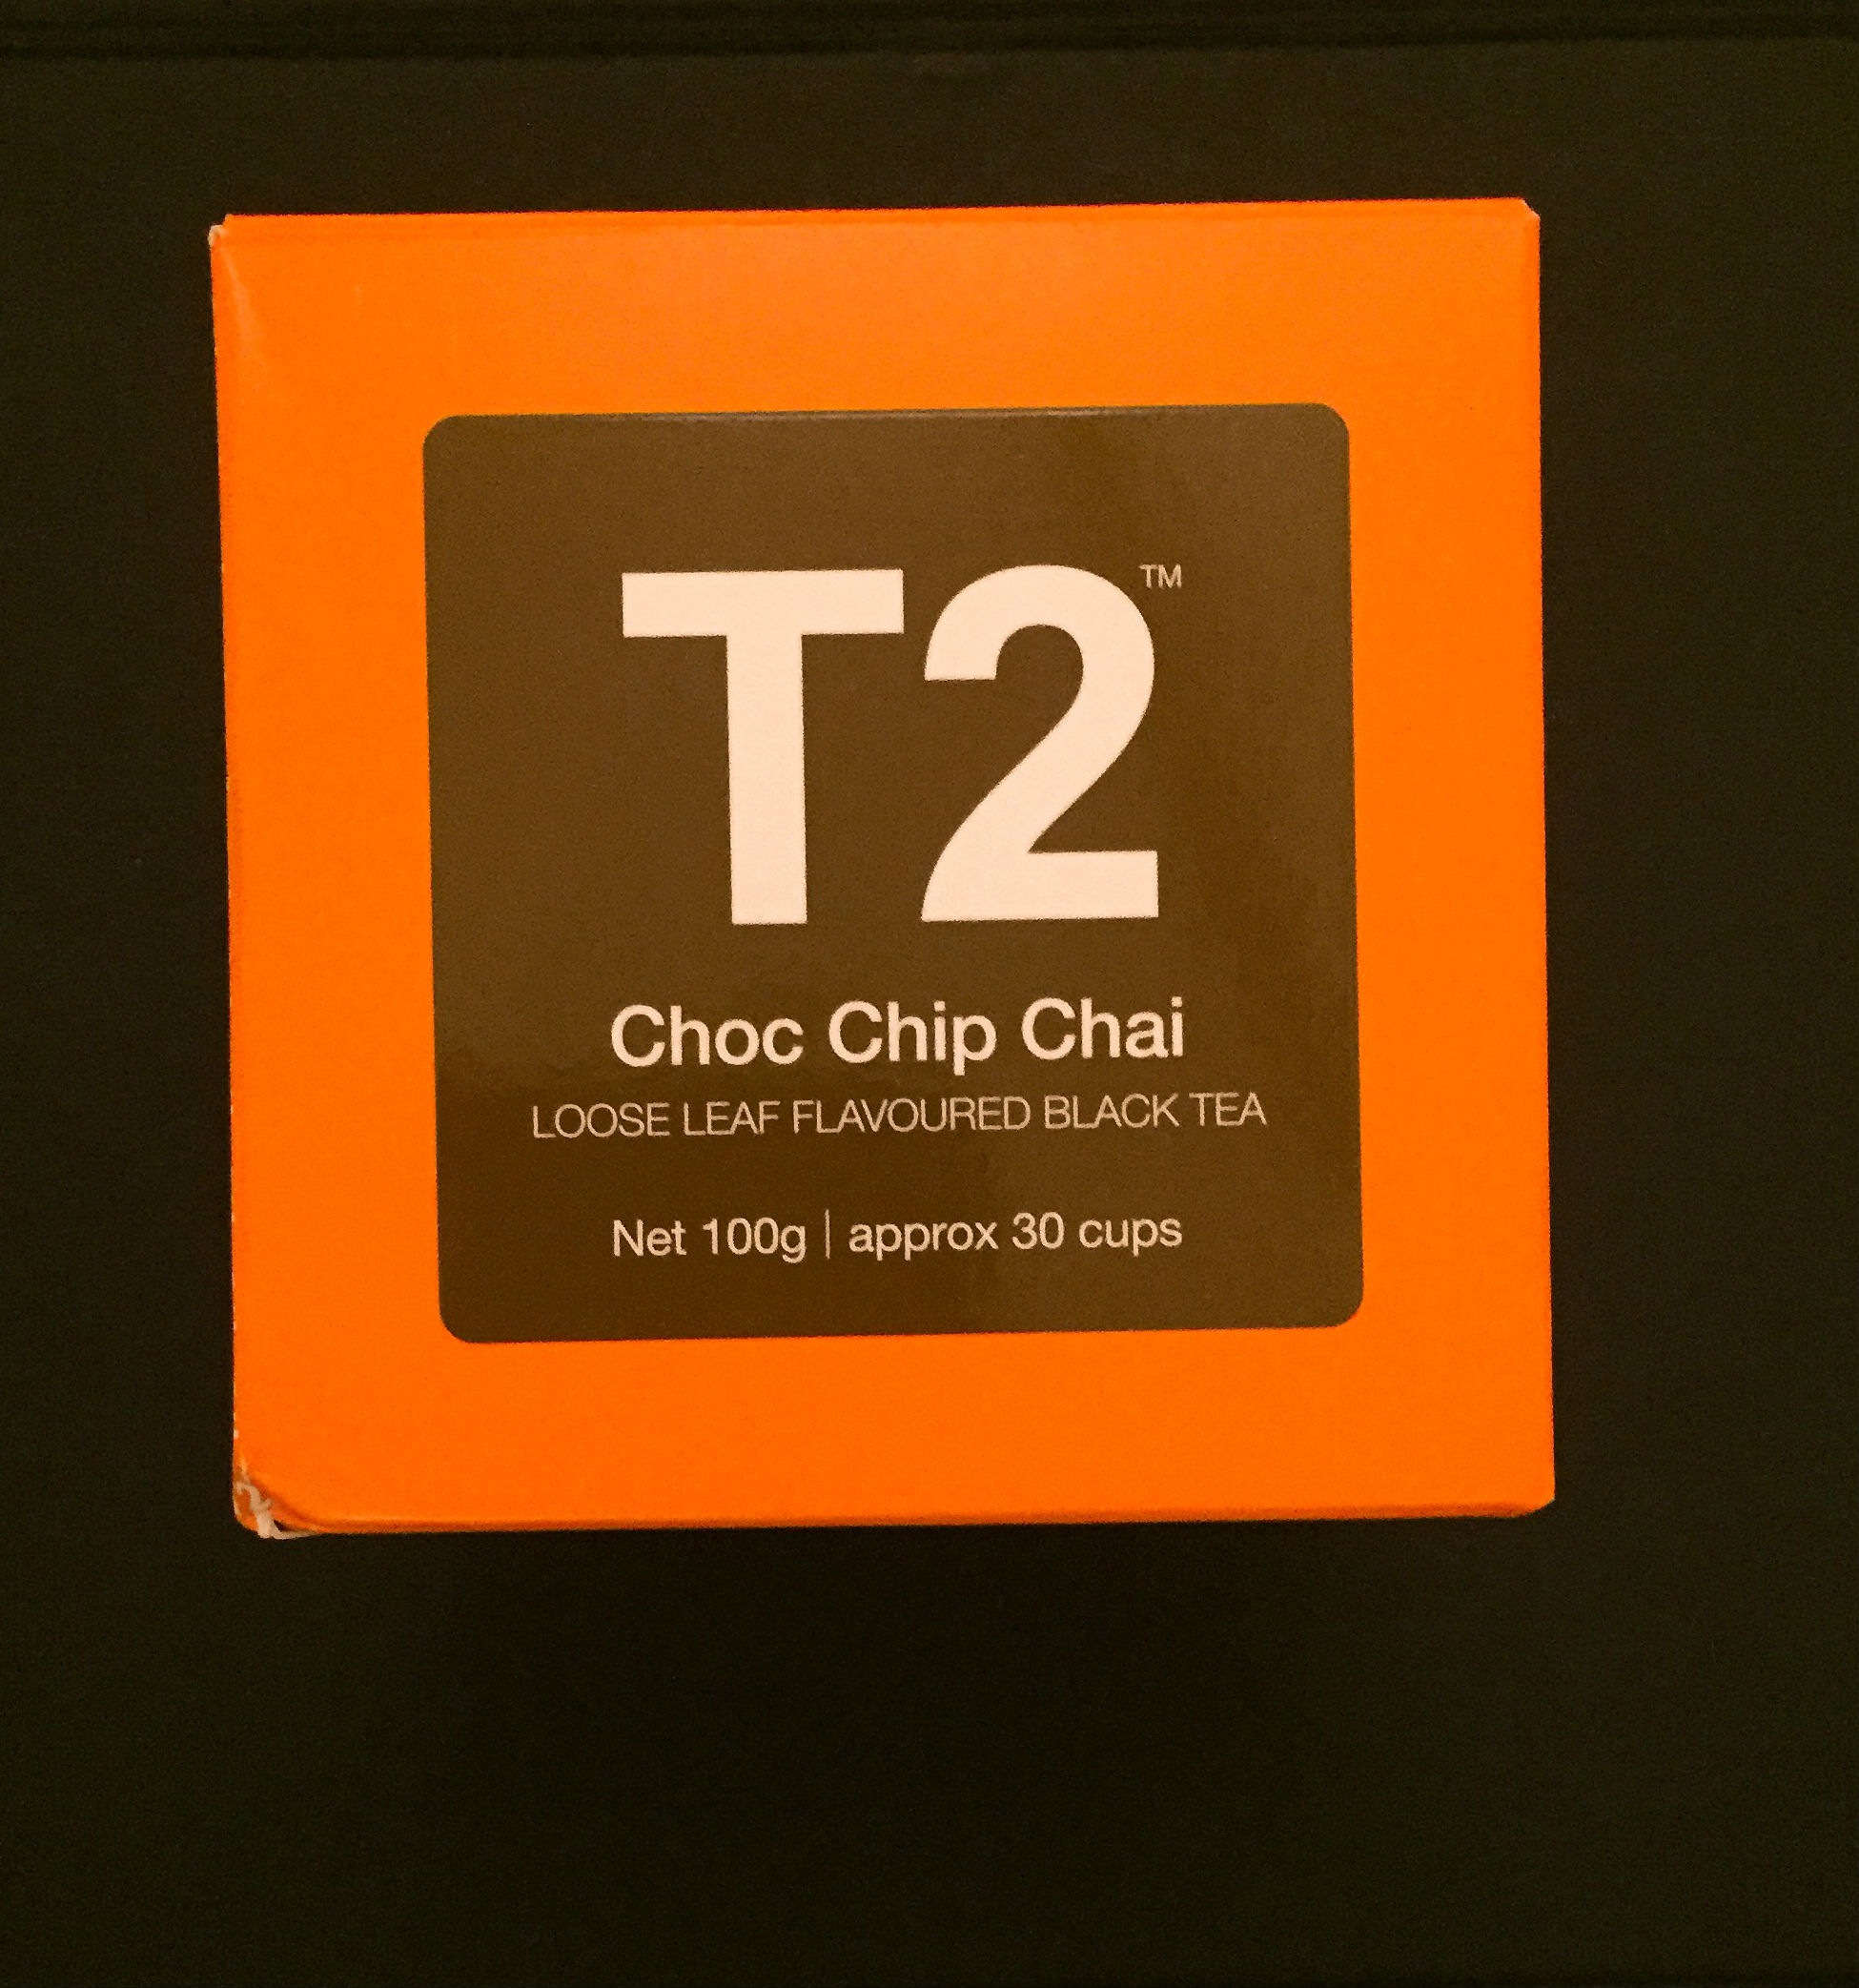 Choc Chip Chai perfect for Autumn